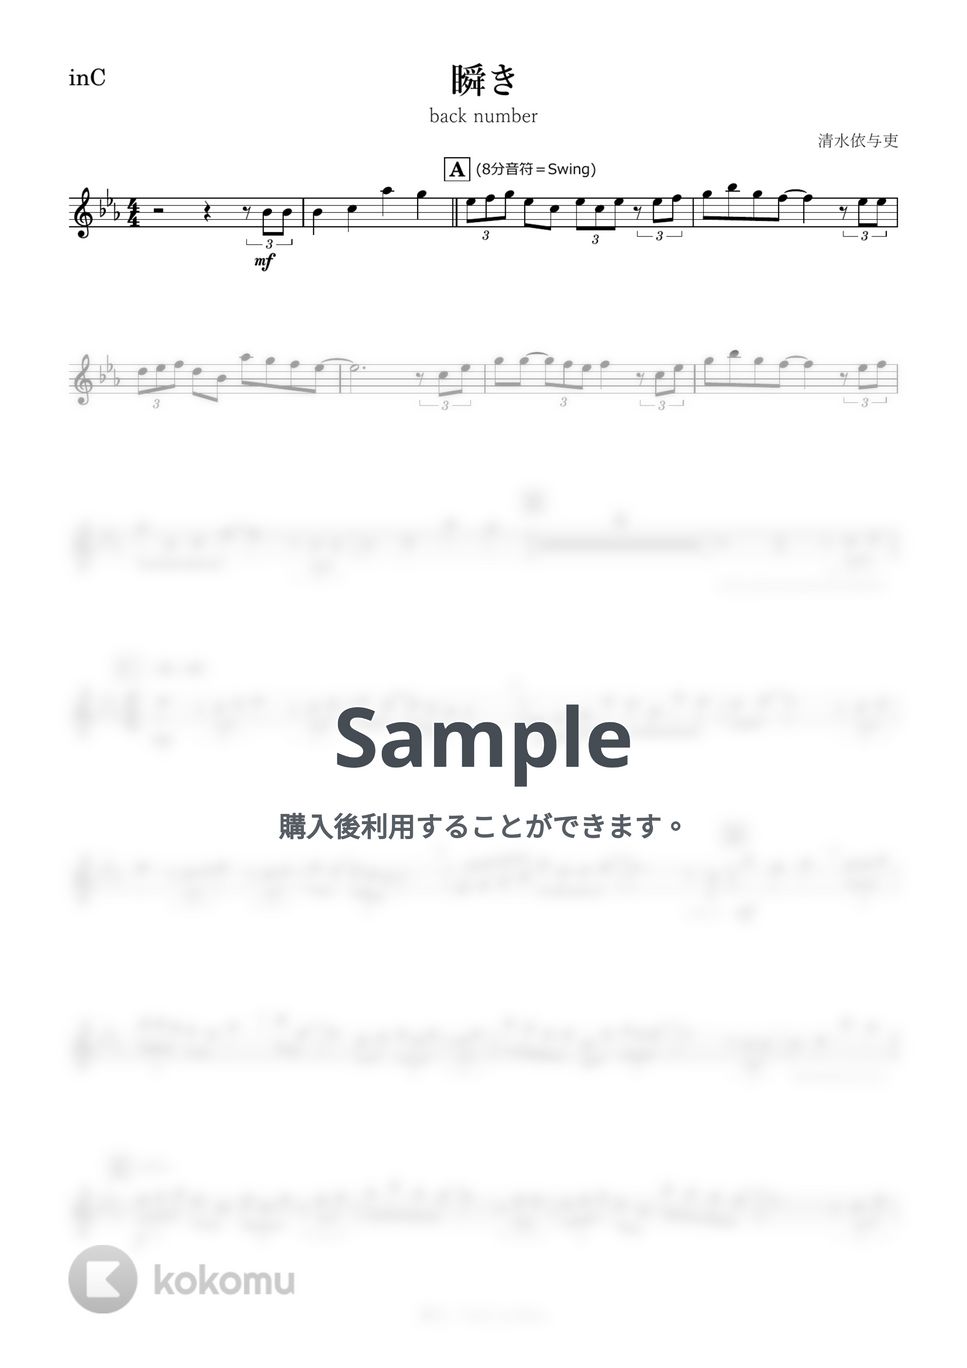 back number - 瞬き (C) by kanamusic